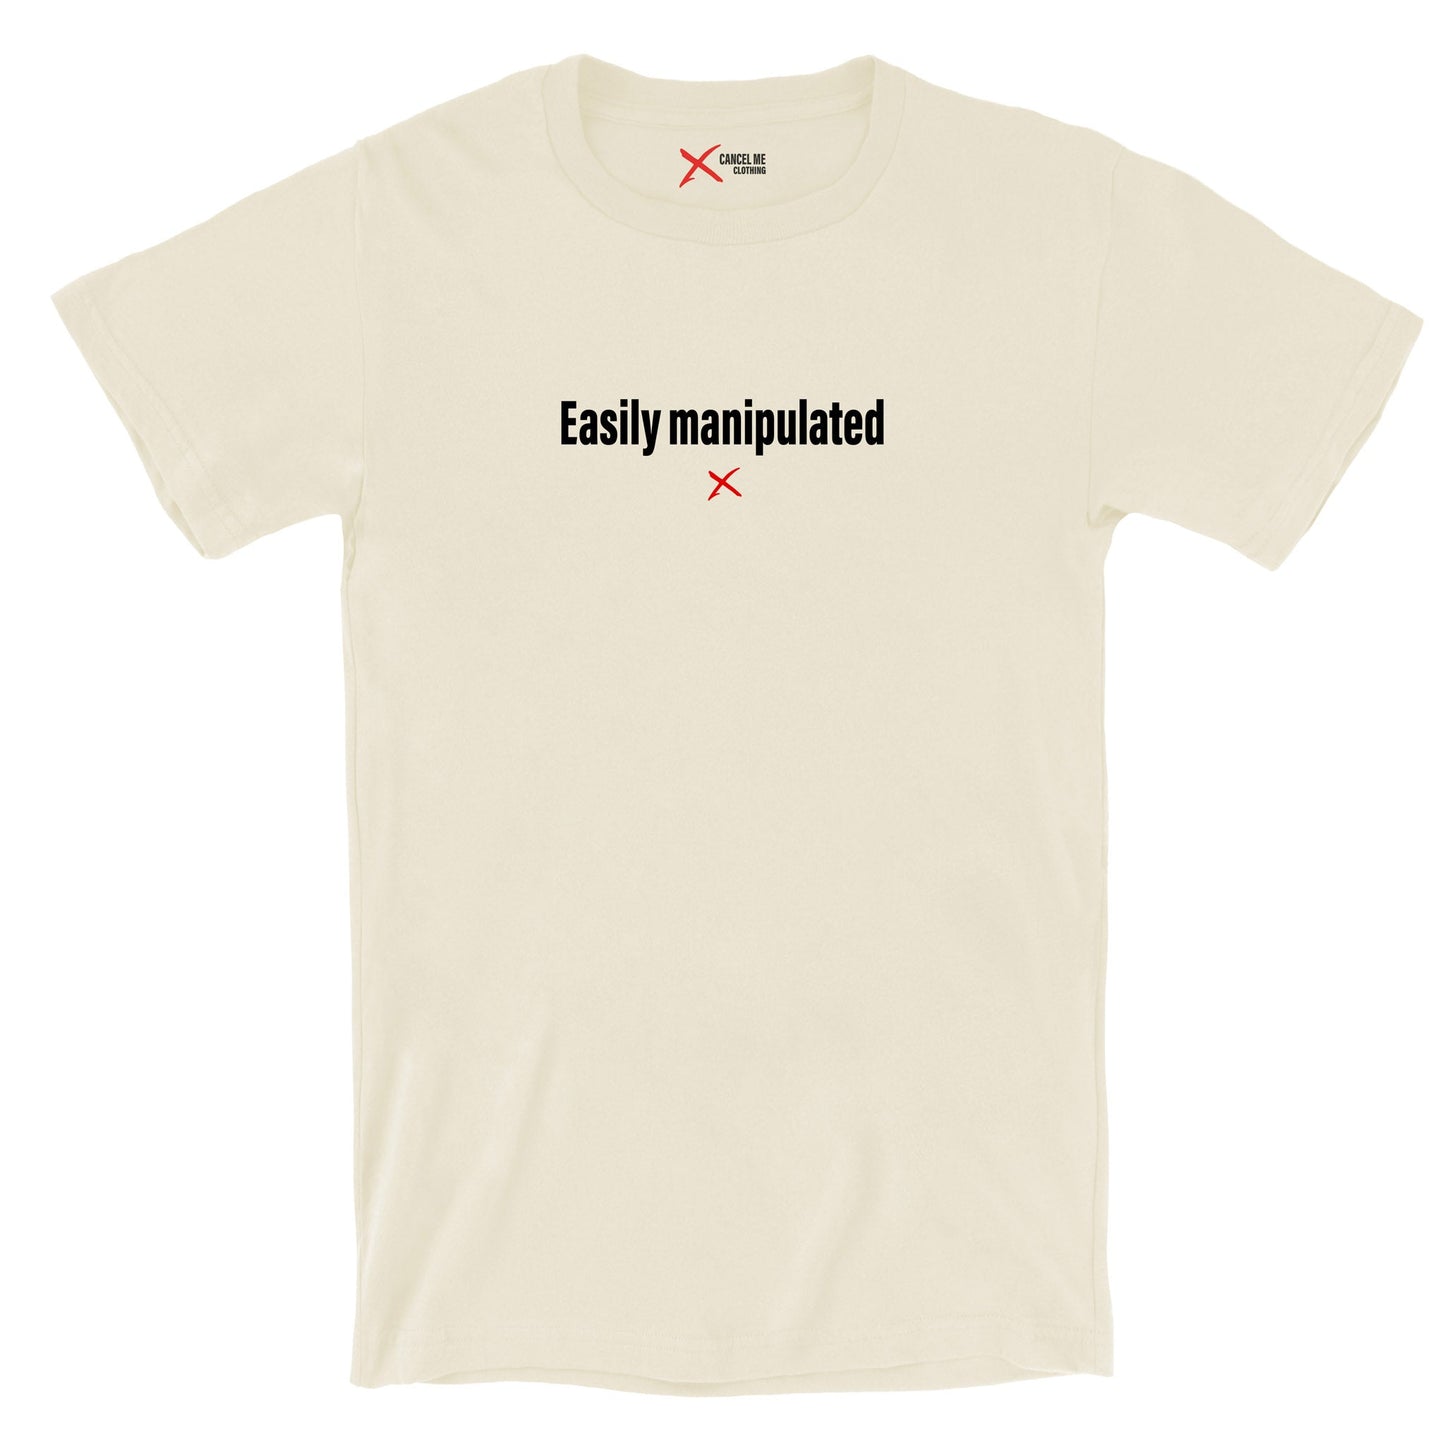 Easily manipulated - Shirt